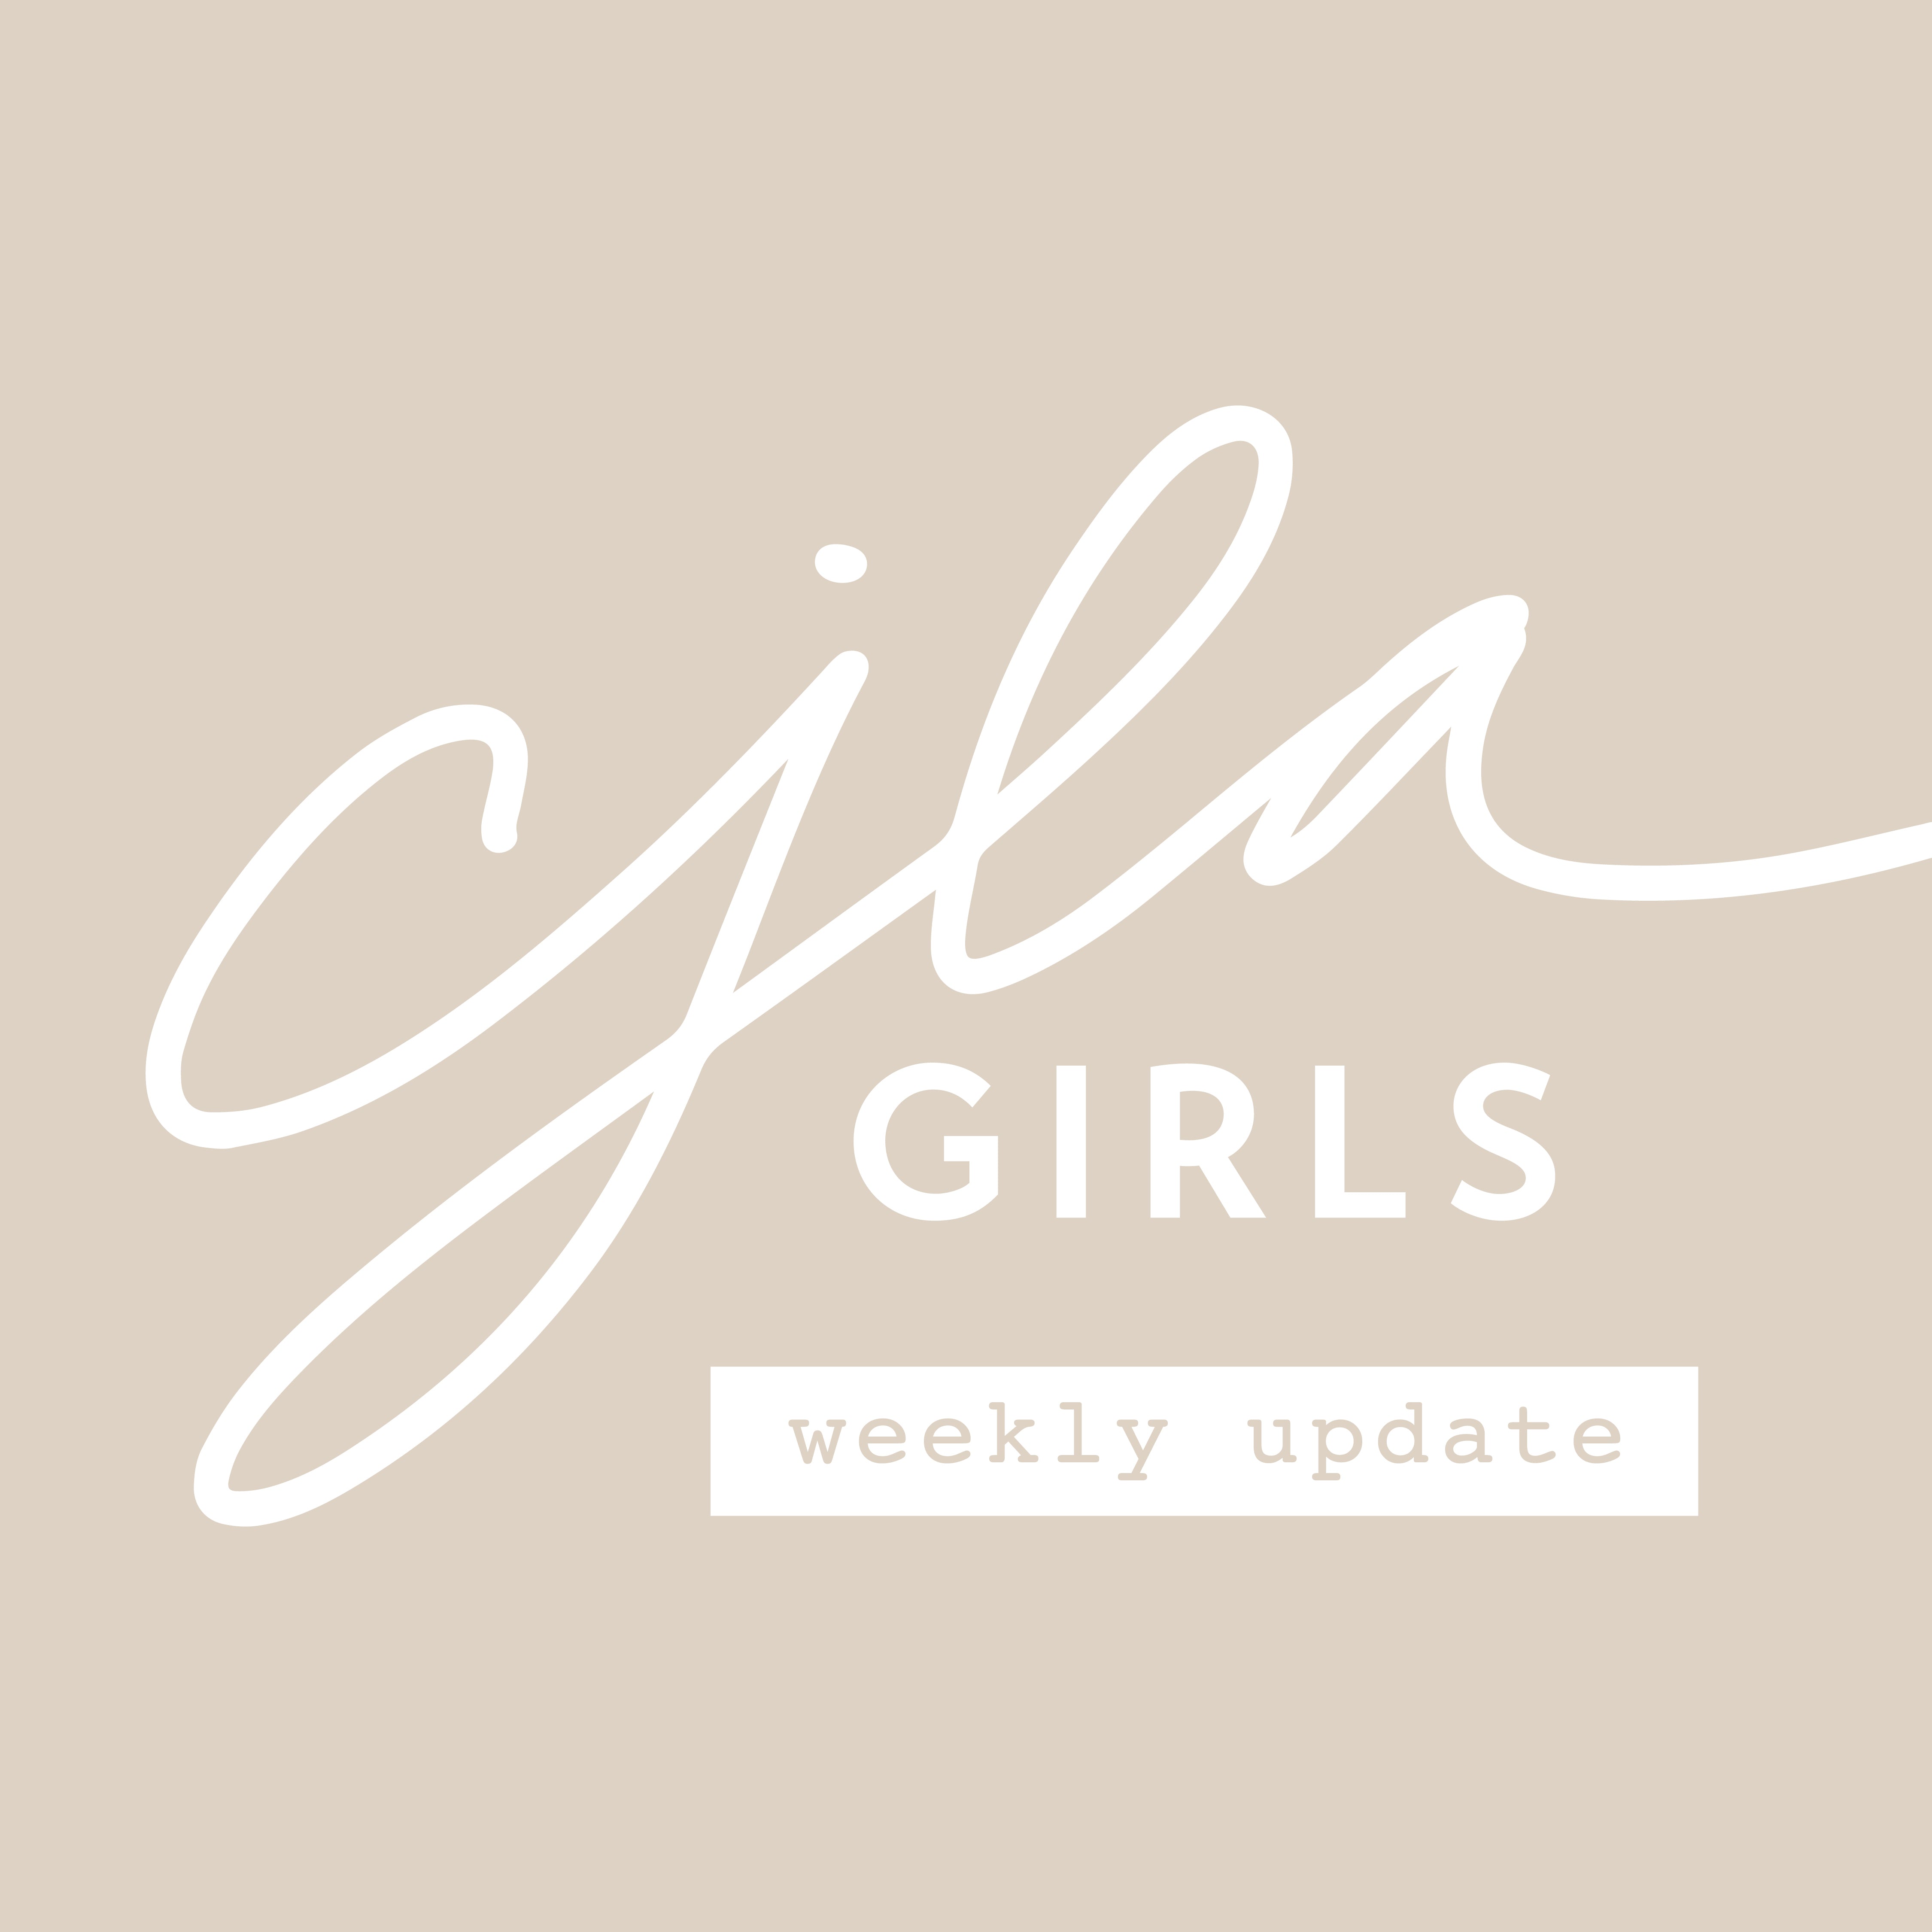 CJLA Girls Weekly Update: April 19-25